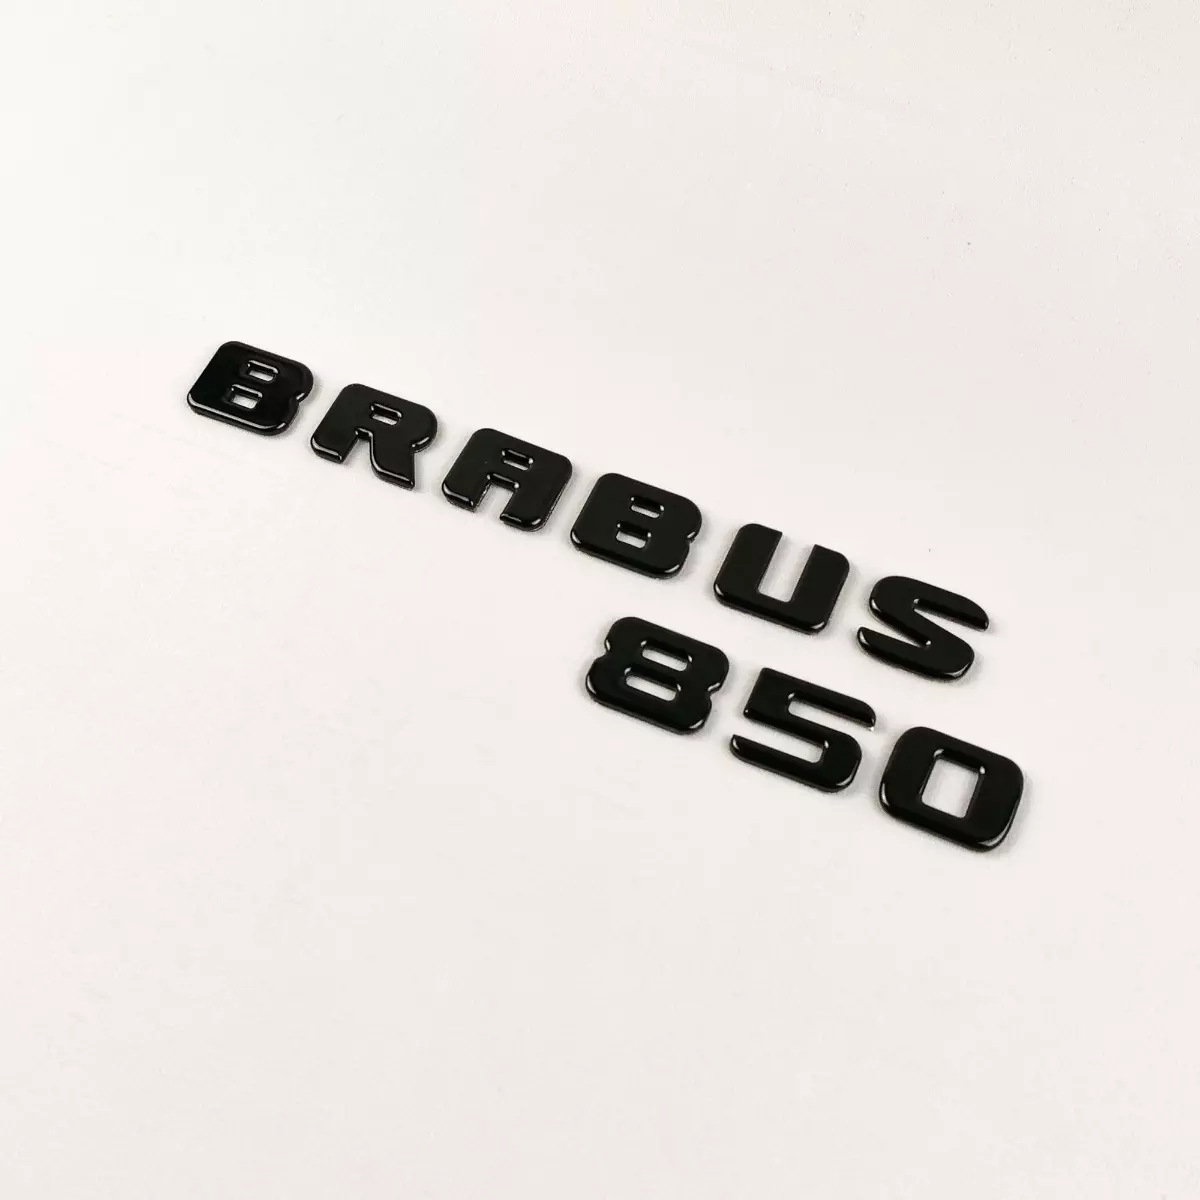 Brabus 850 Emblem Rear Badge for Mercedes-Benz Cars